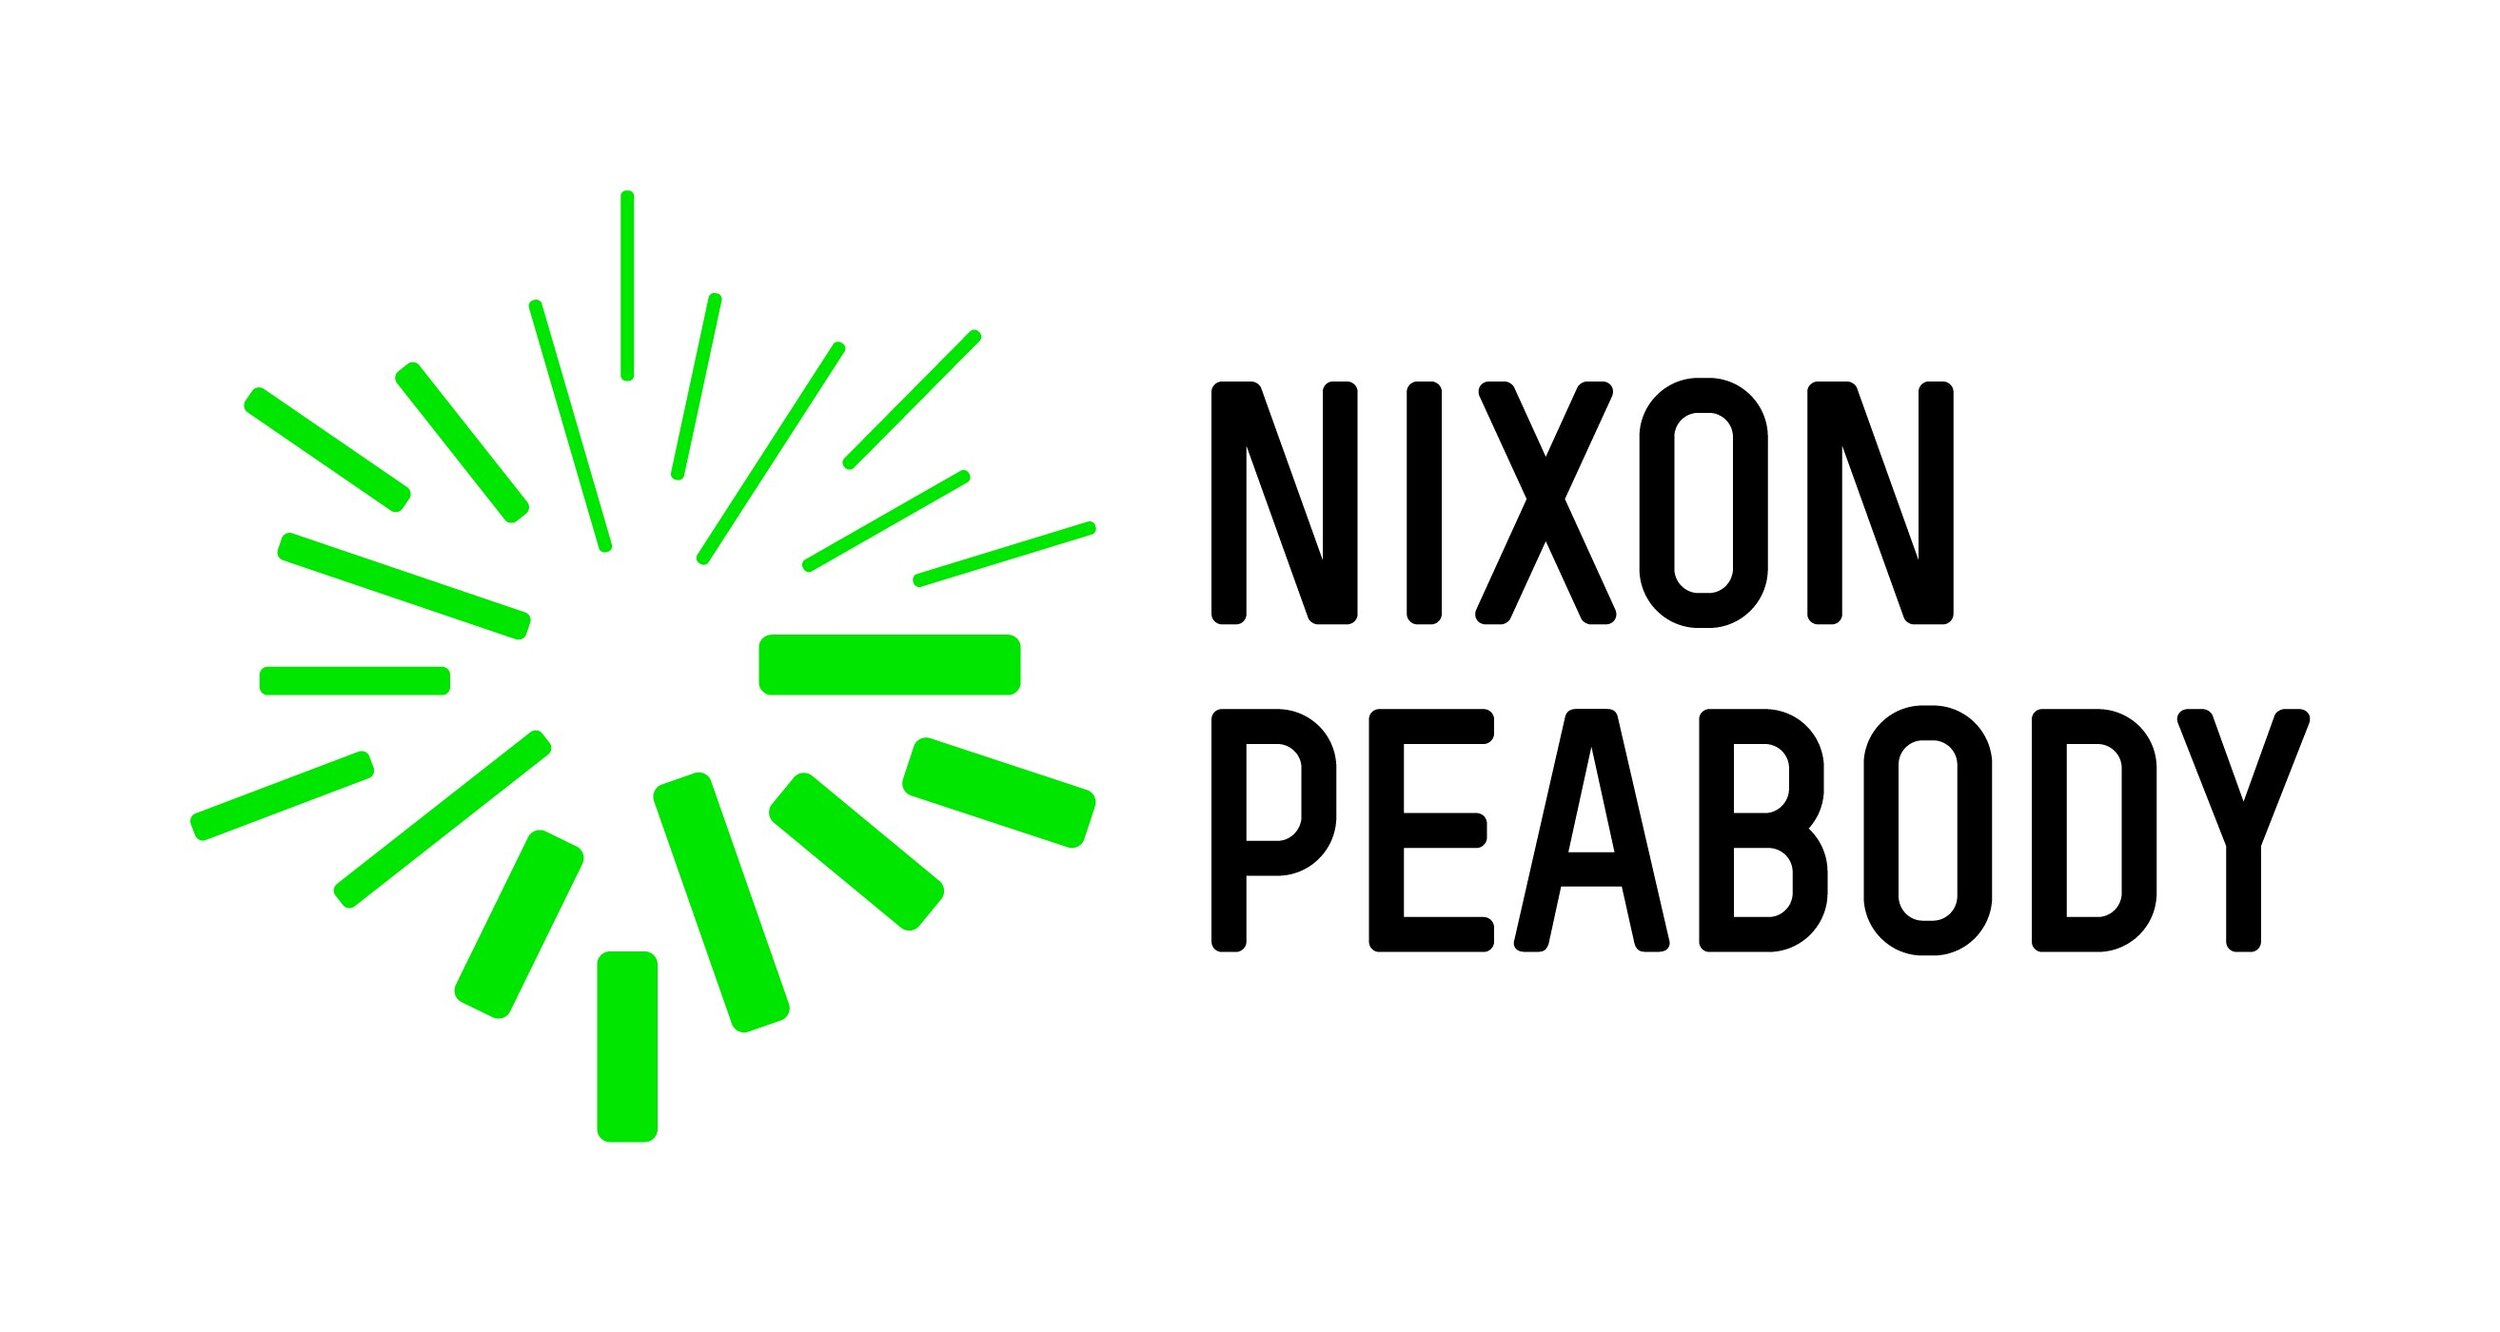 Nixon Peabody.jpg